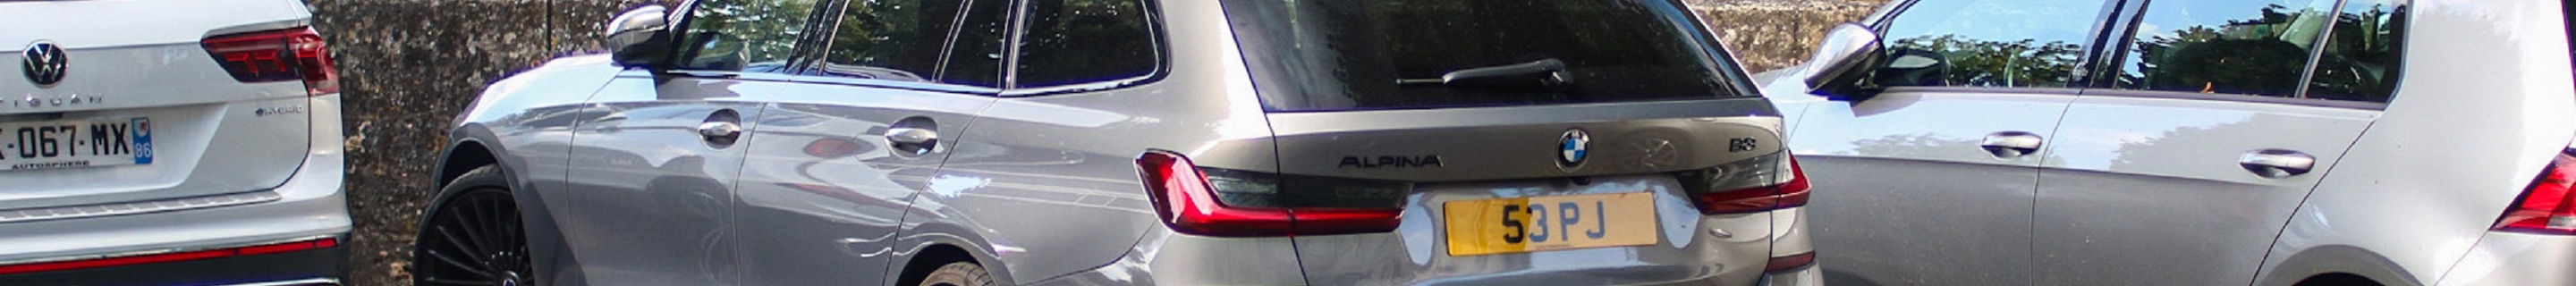 Alpina B3 BiTurbo Touring 2020